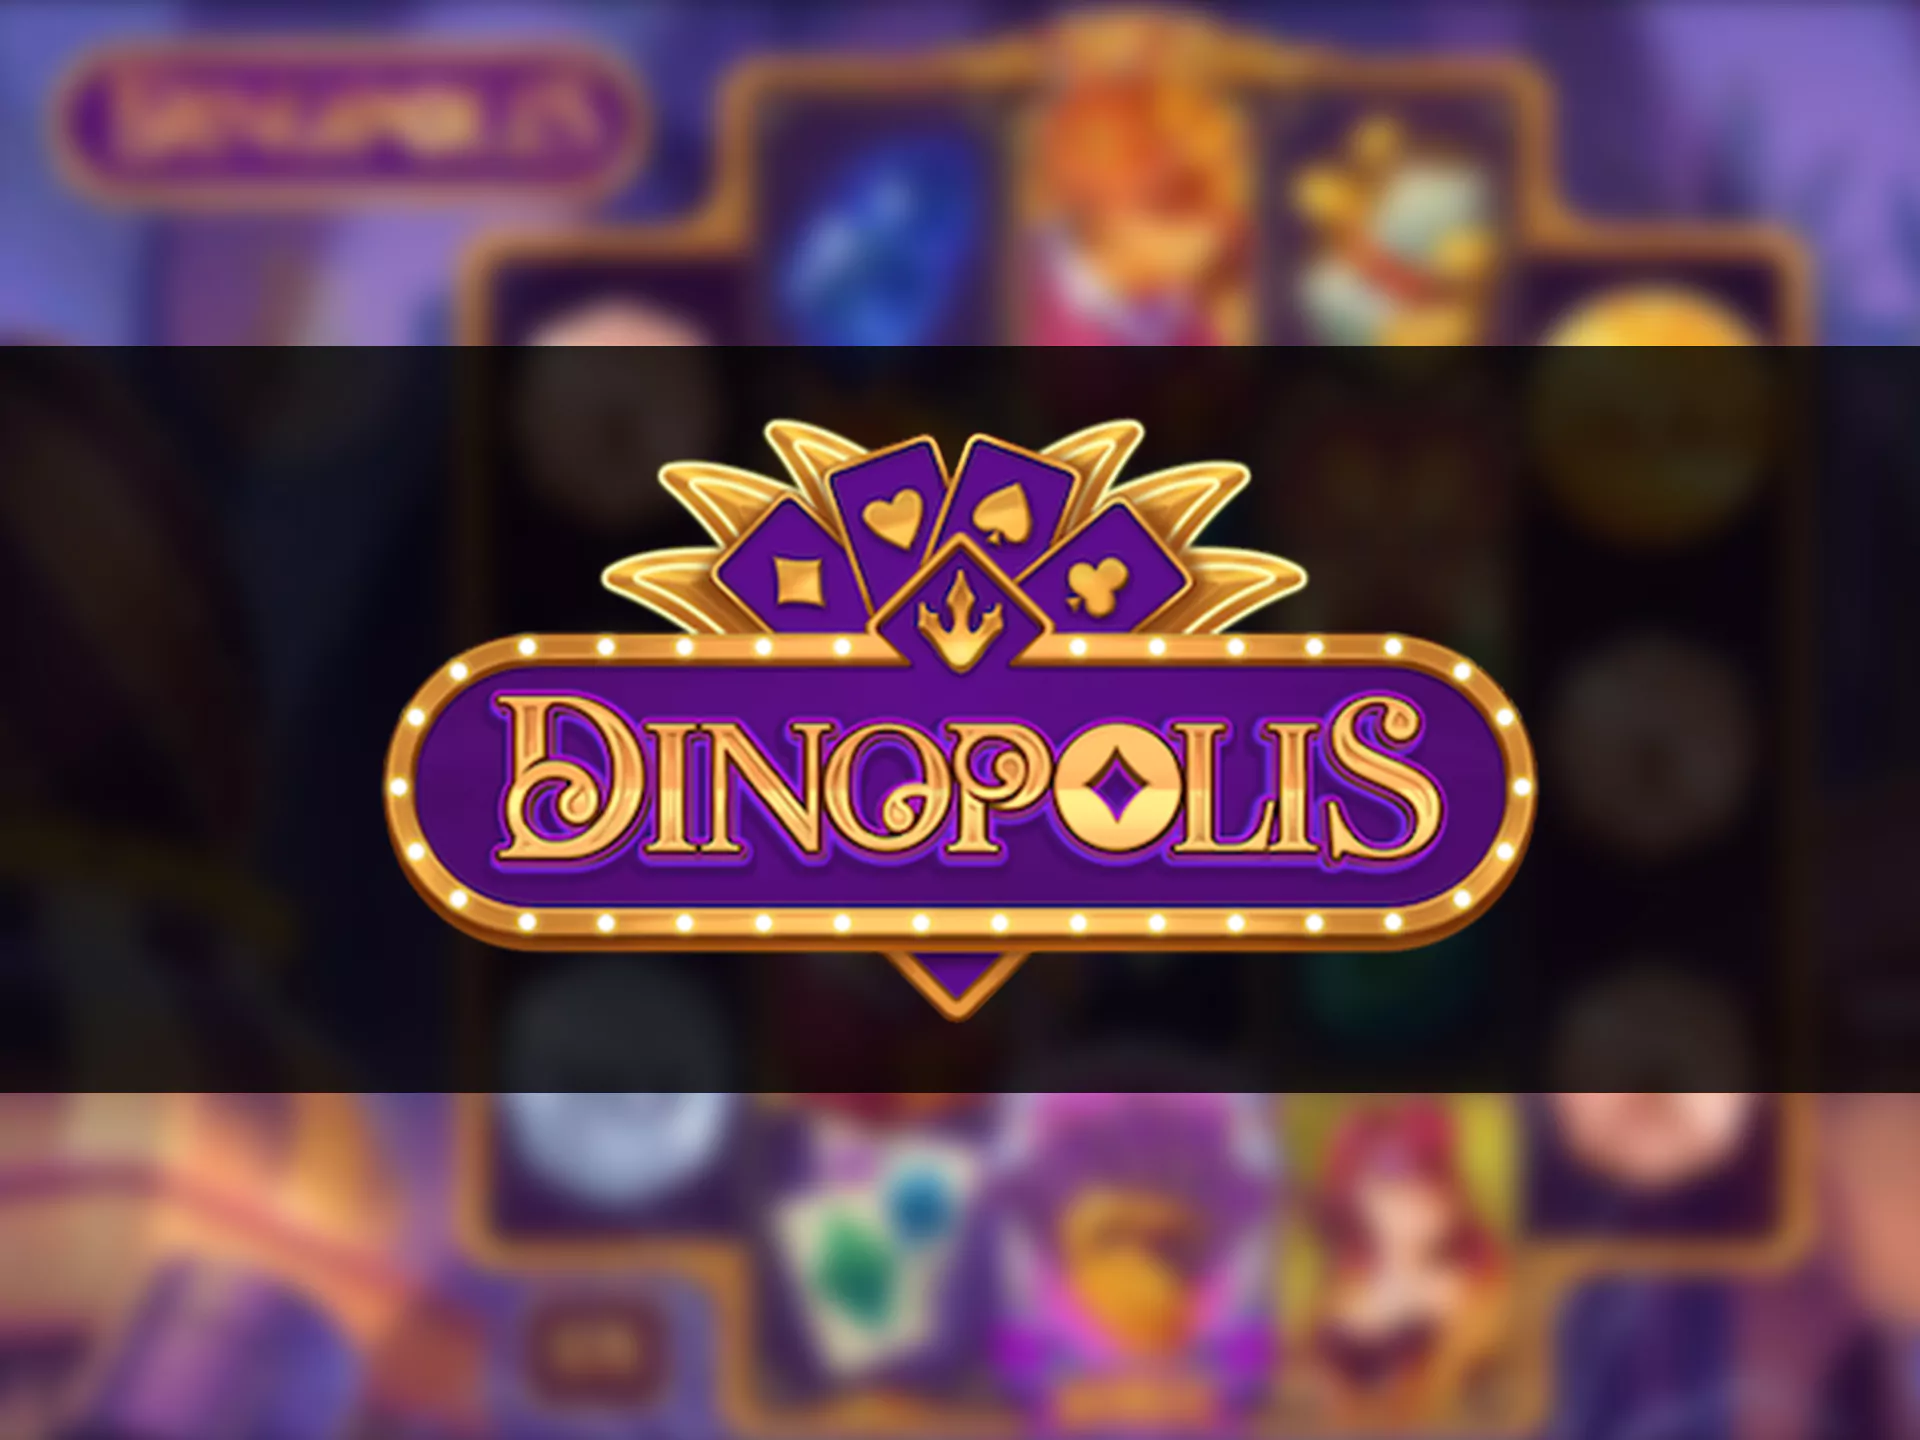 Enjoy playing at Dinopolis slots.